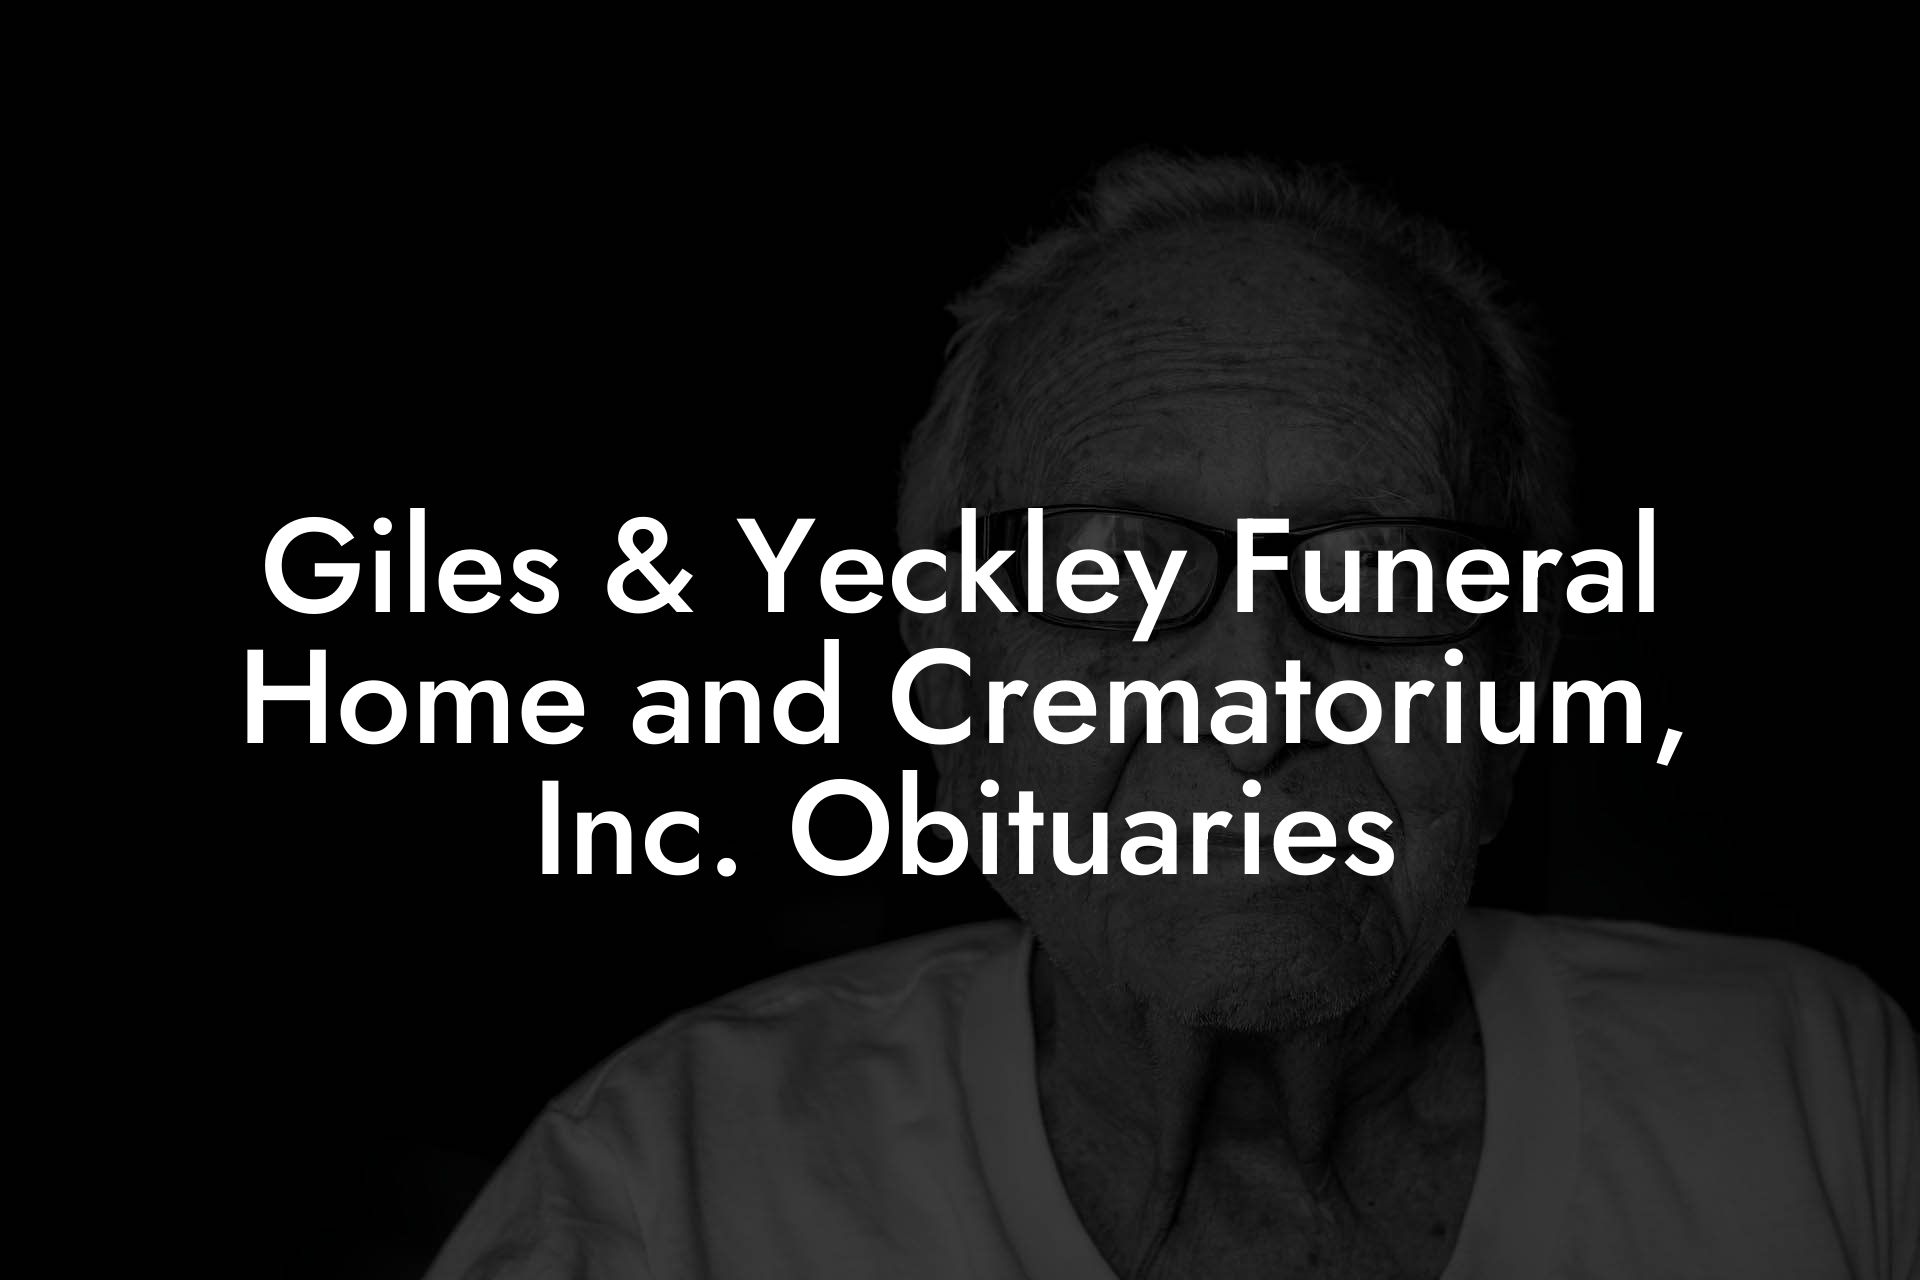 Giles & Yeckley Funeral Home and Crematorium, Inc. Obituaries